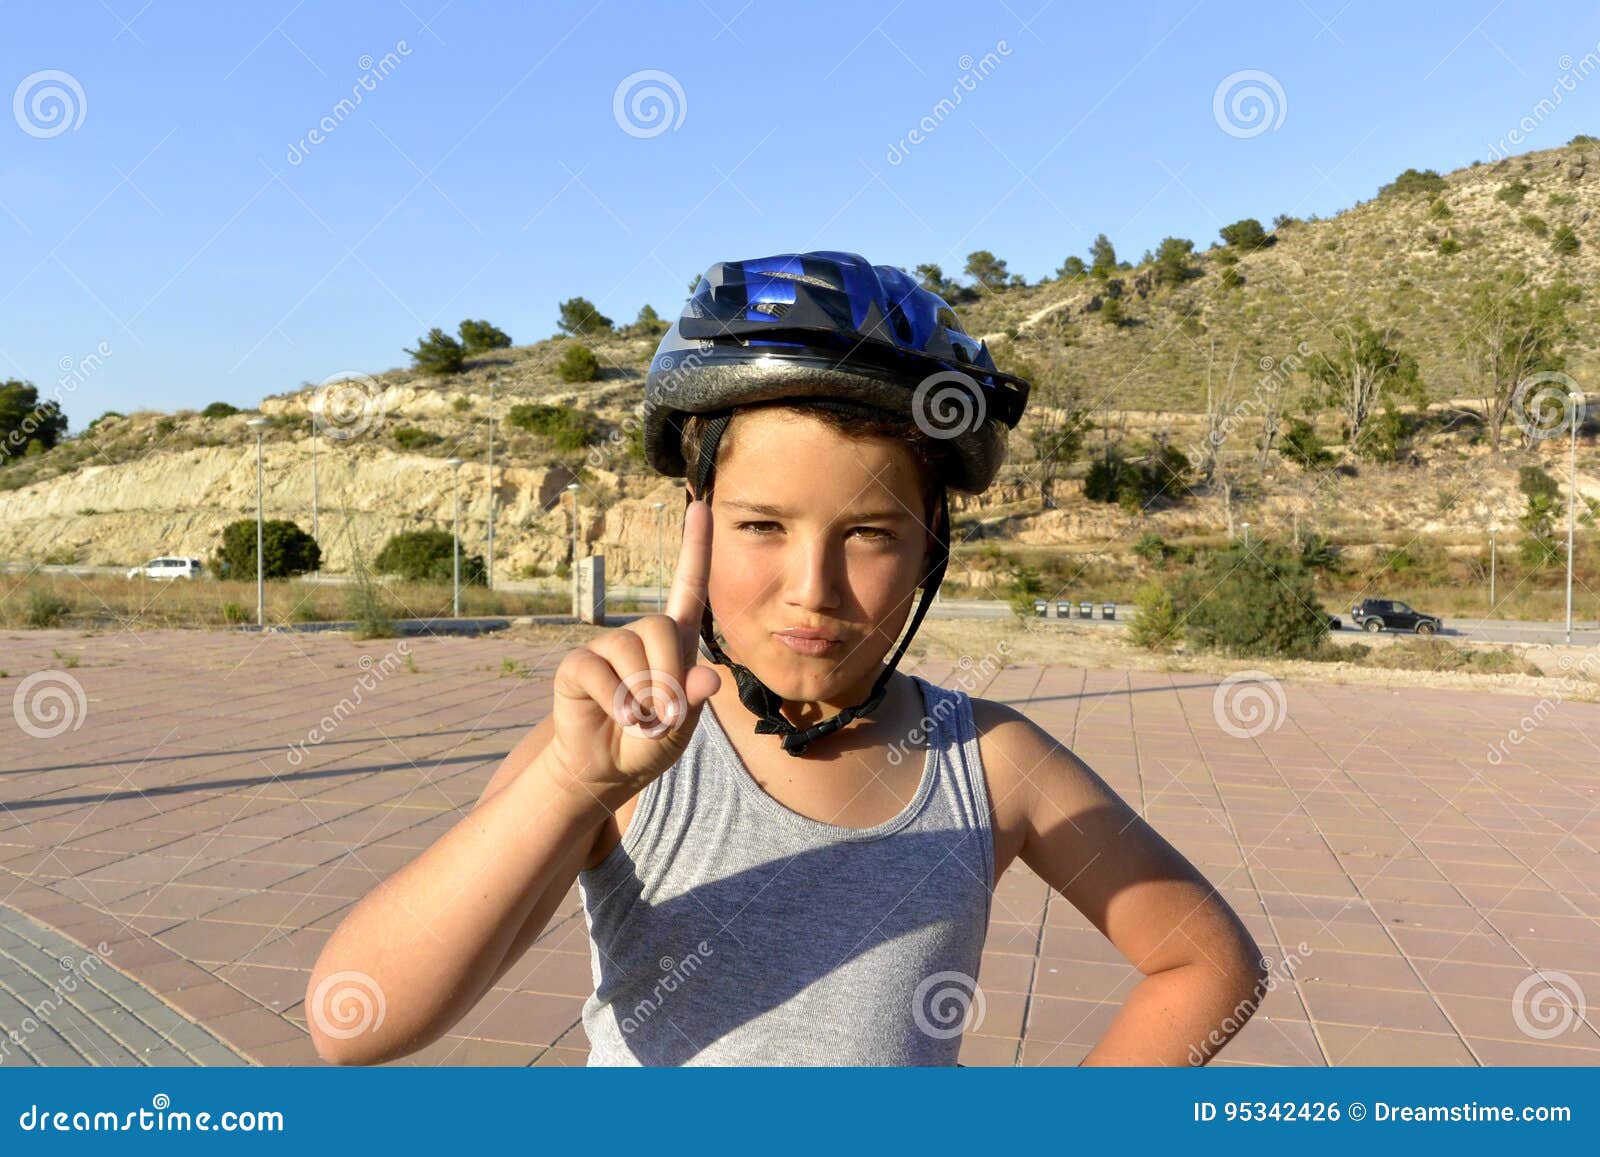 boy with helmet riding monowheel on promenade